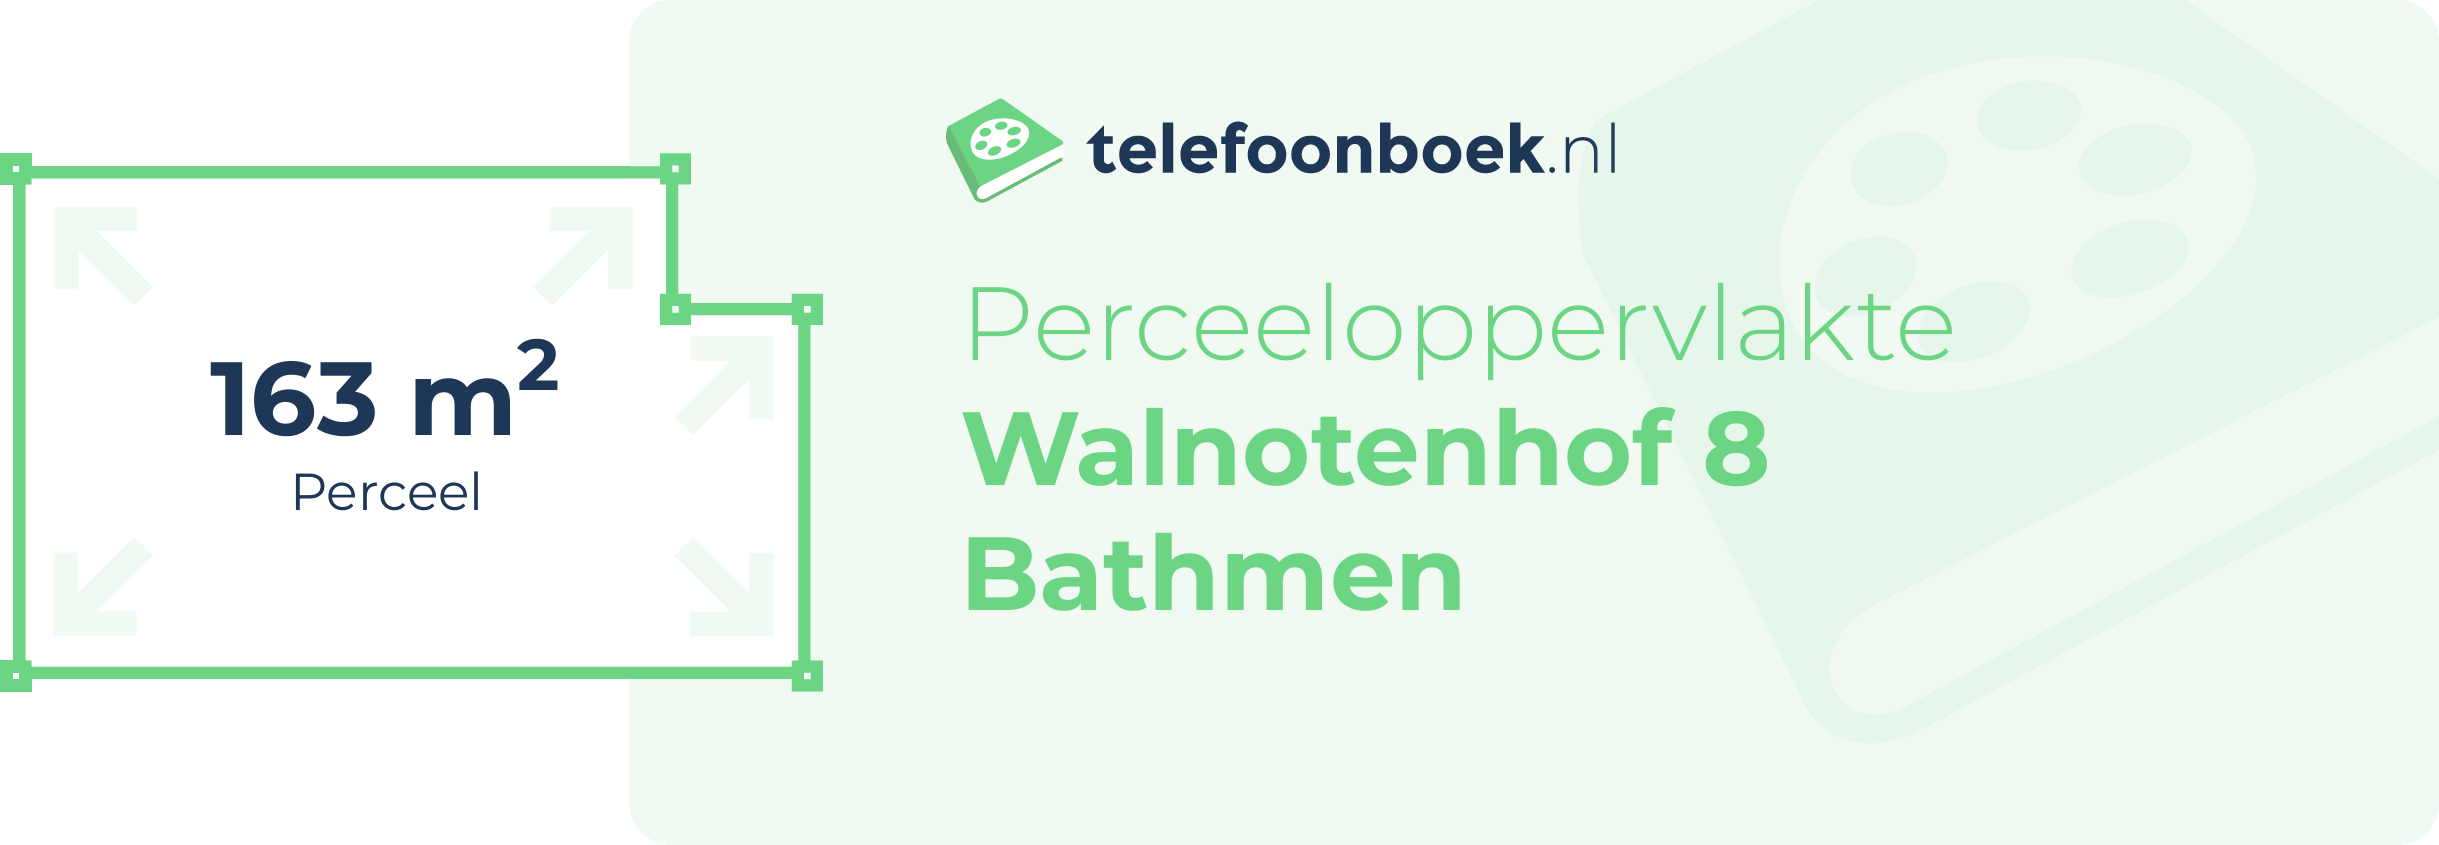 Perceeloppervlakte Walnotenhof 8 Bathmen